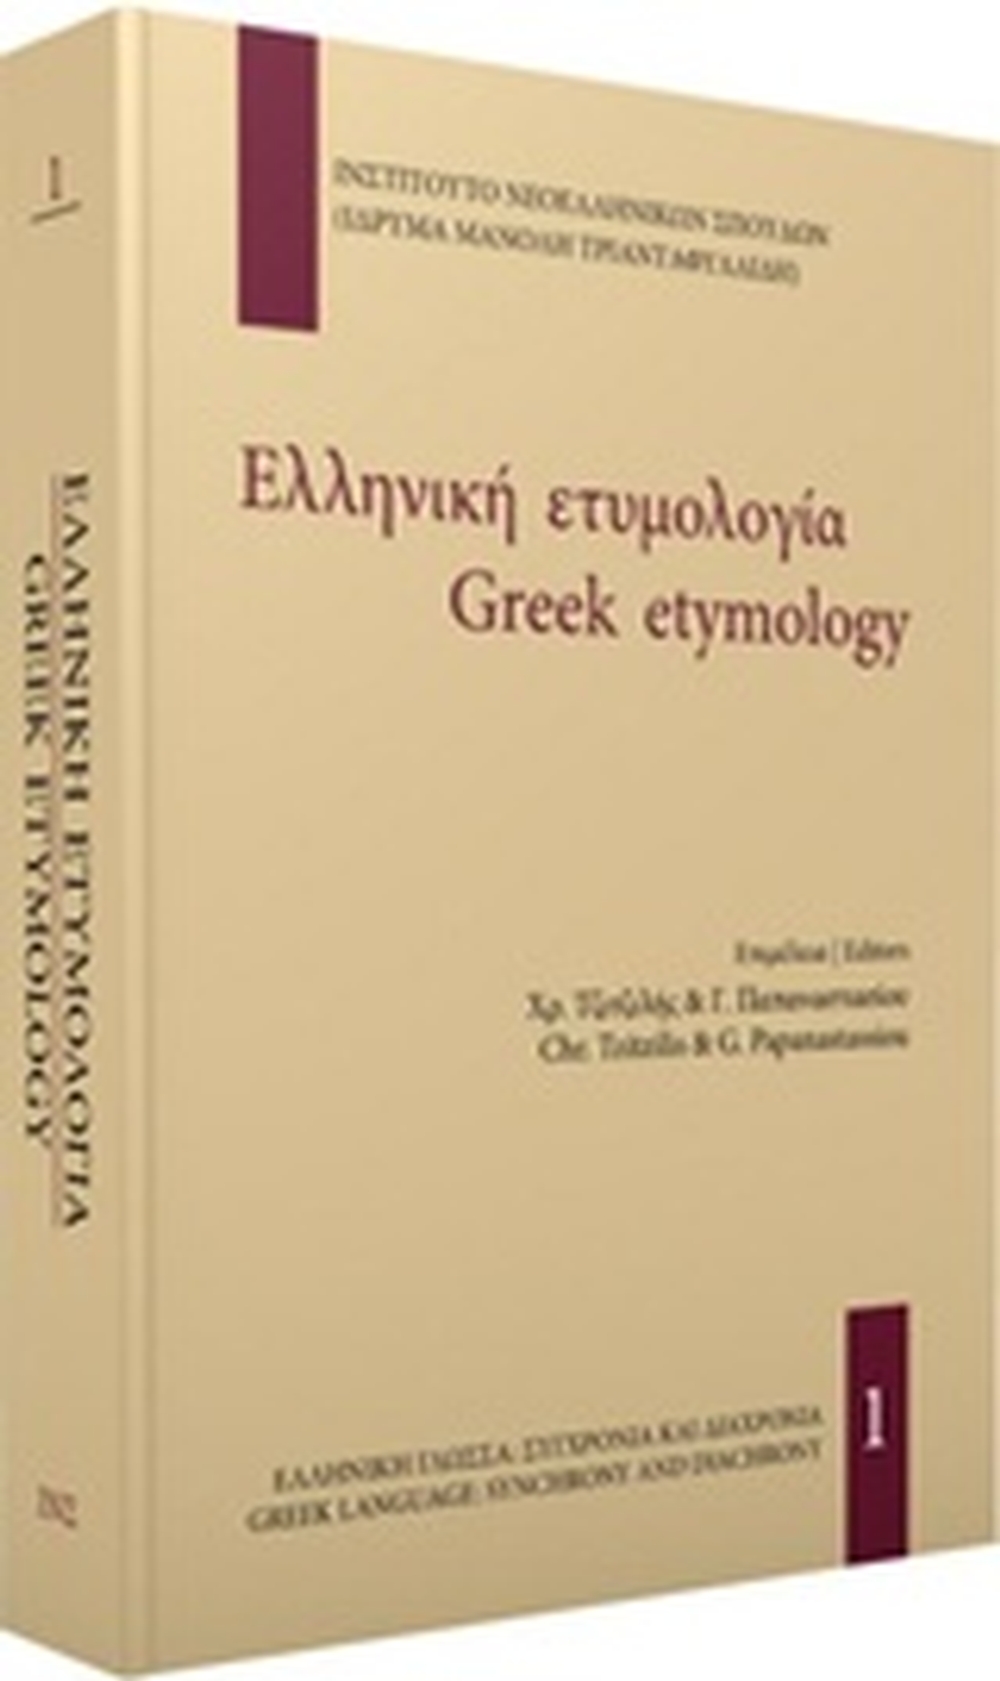 Parga Bookstore - Ελληνική ετυμολογία